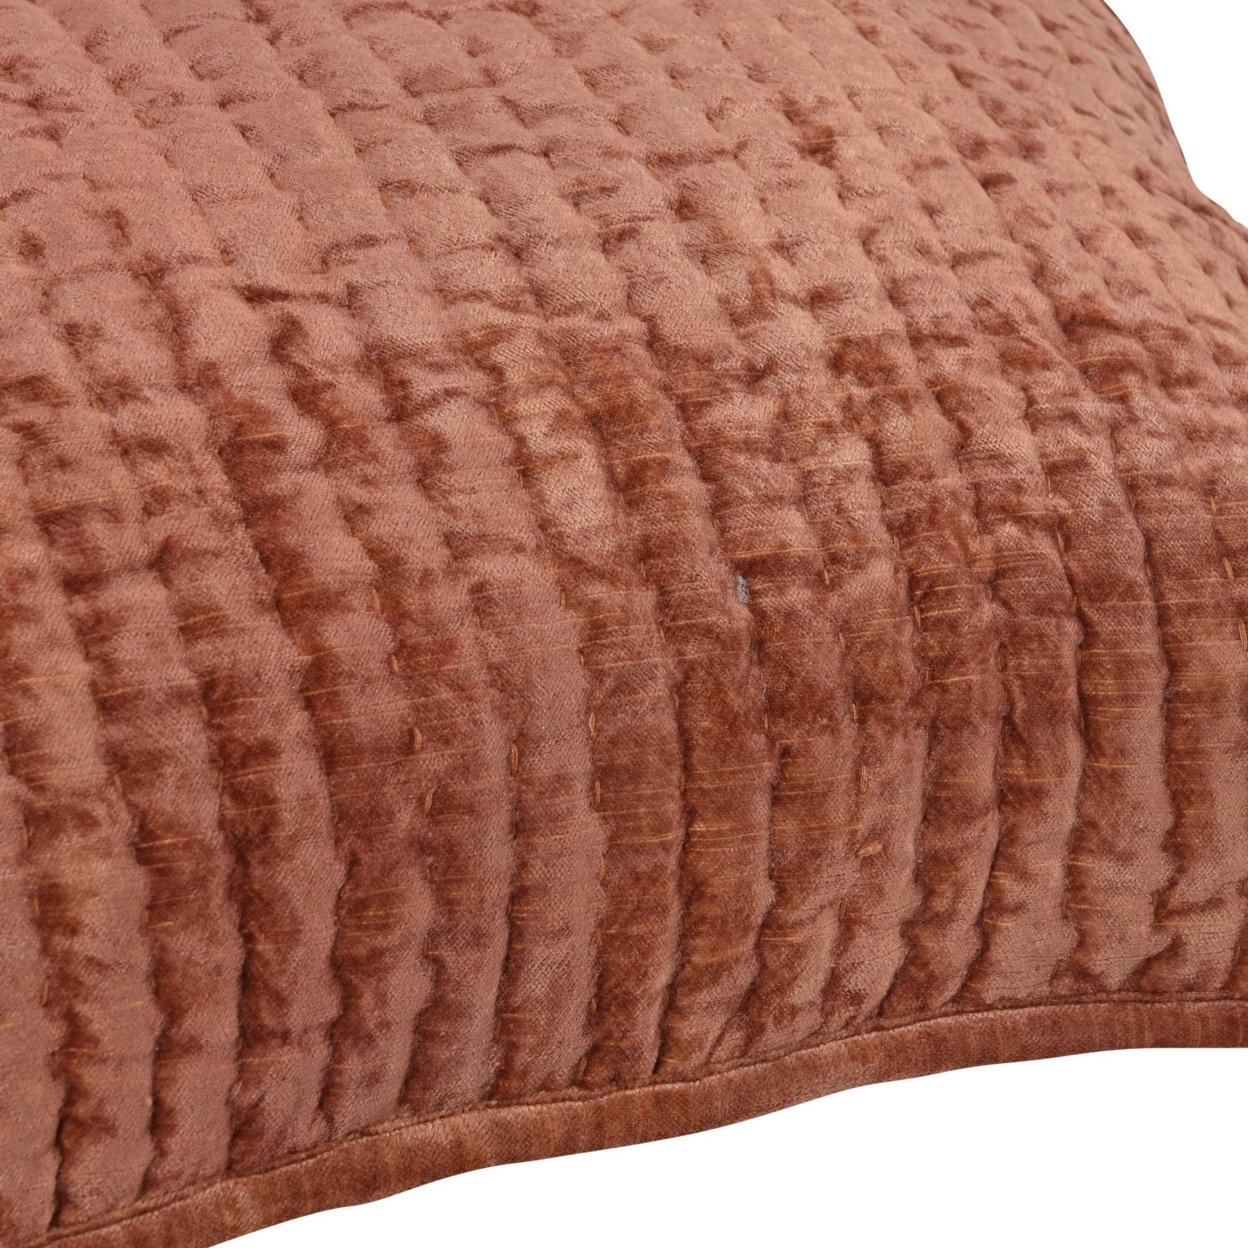 Bili 108 X 96 Stitched Rayon Velvet King Size Quilt, Polyfill, Orange Brown- Saltoro Sherpi